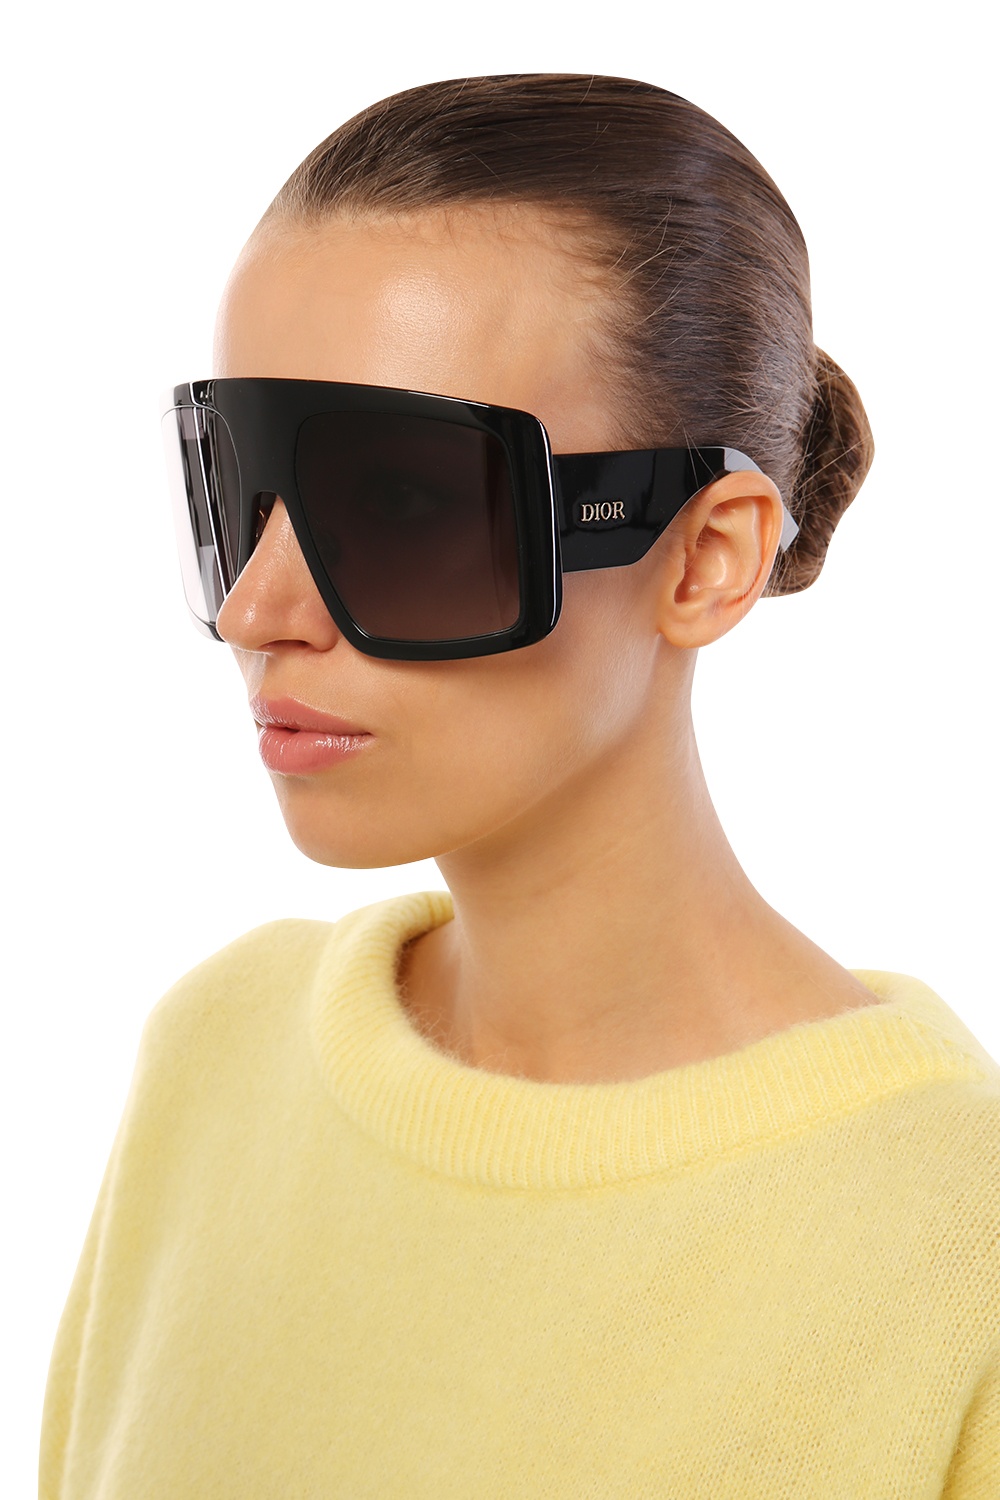 dior solight 2 sunglasses